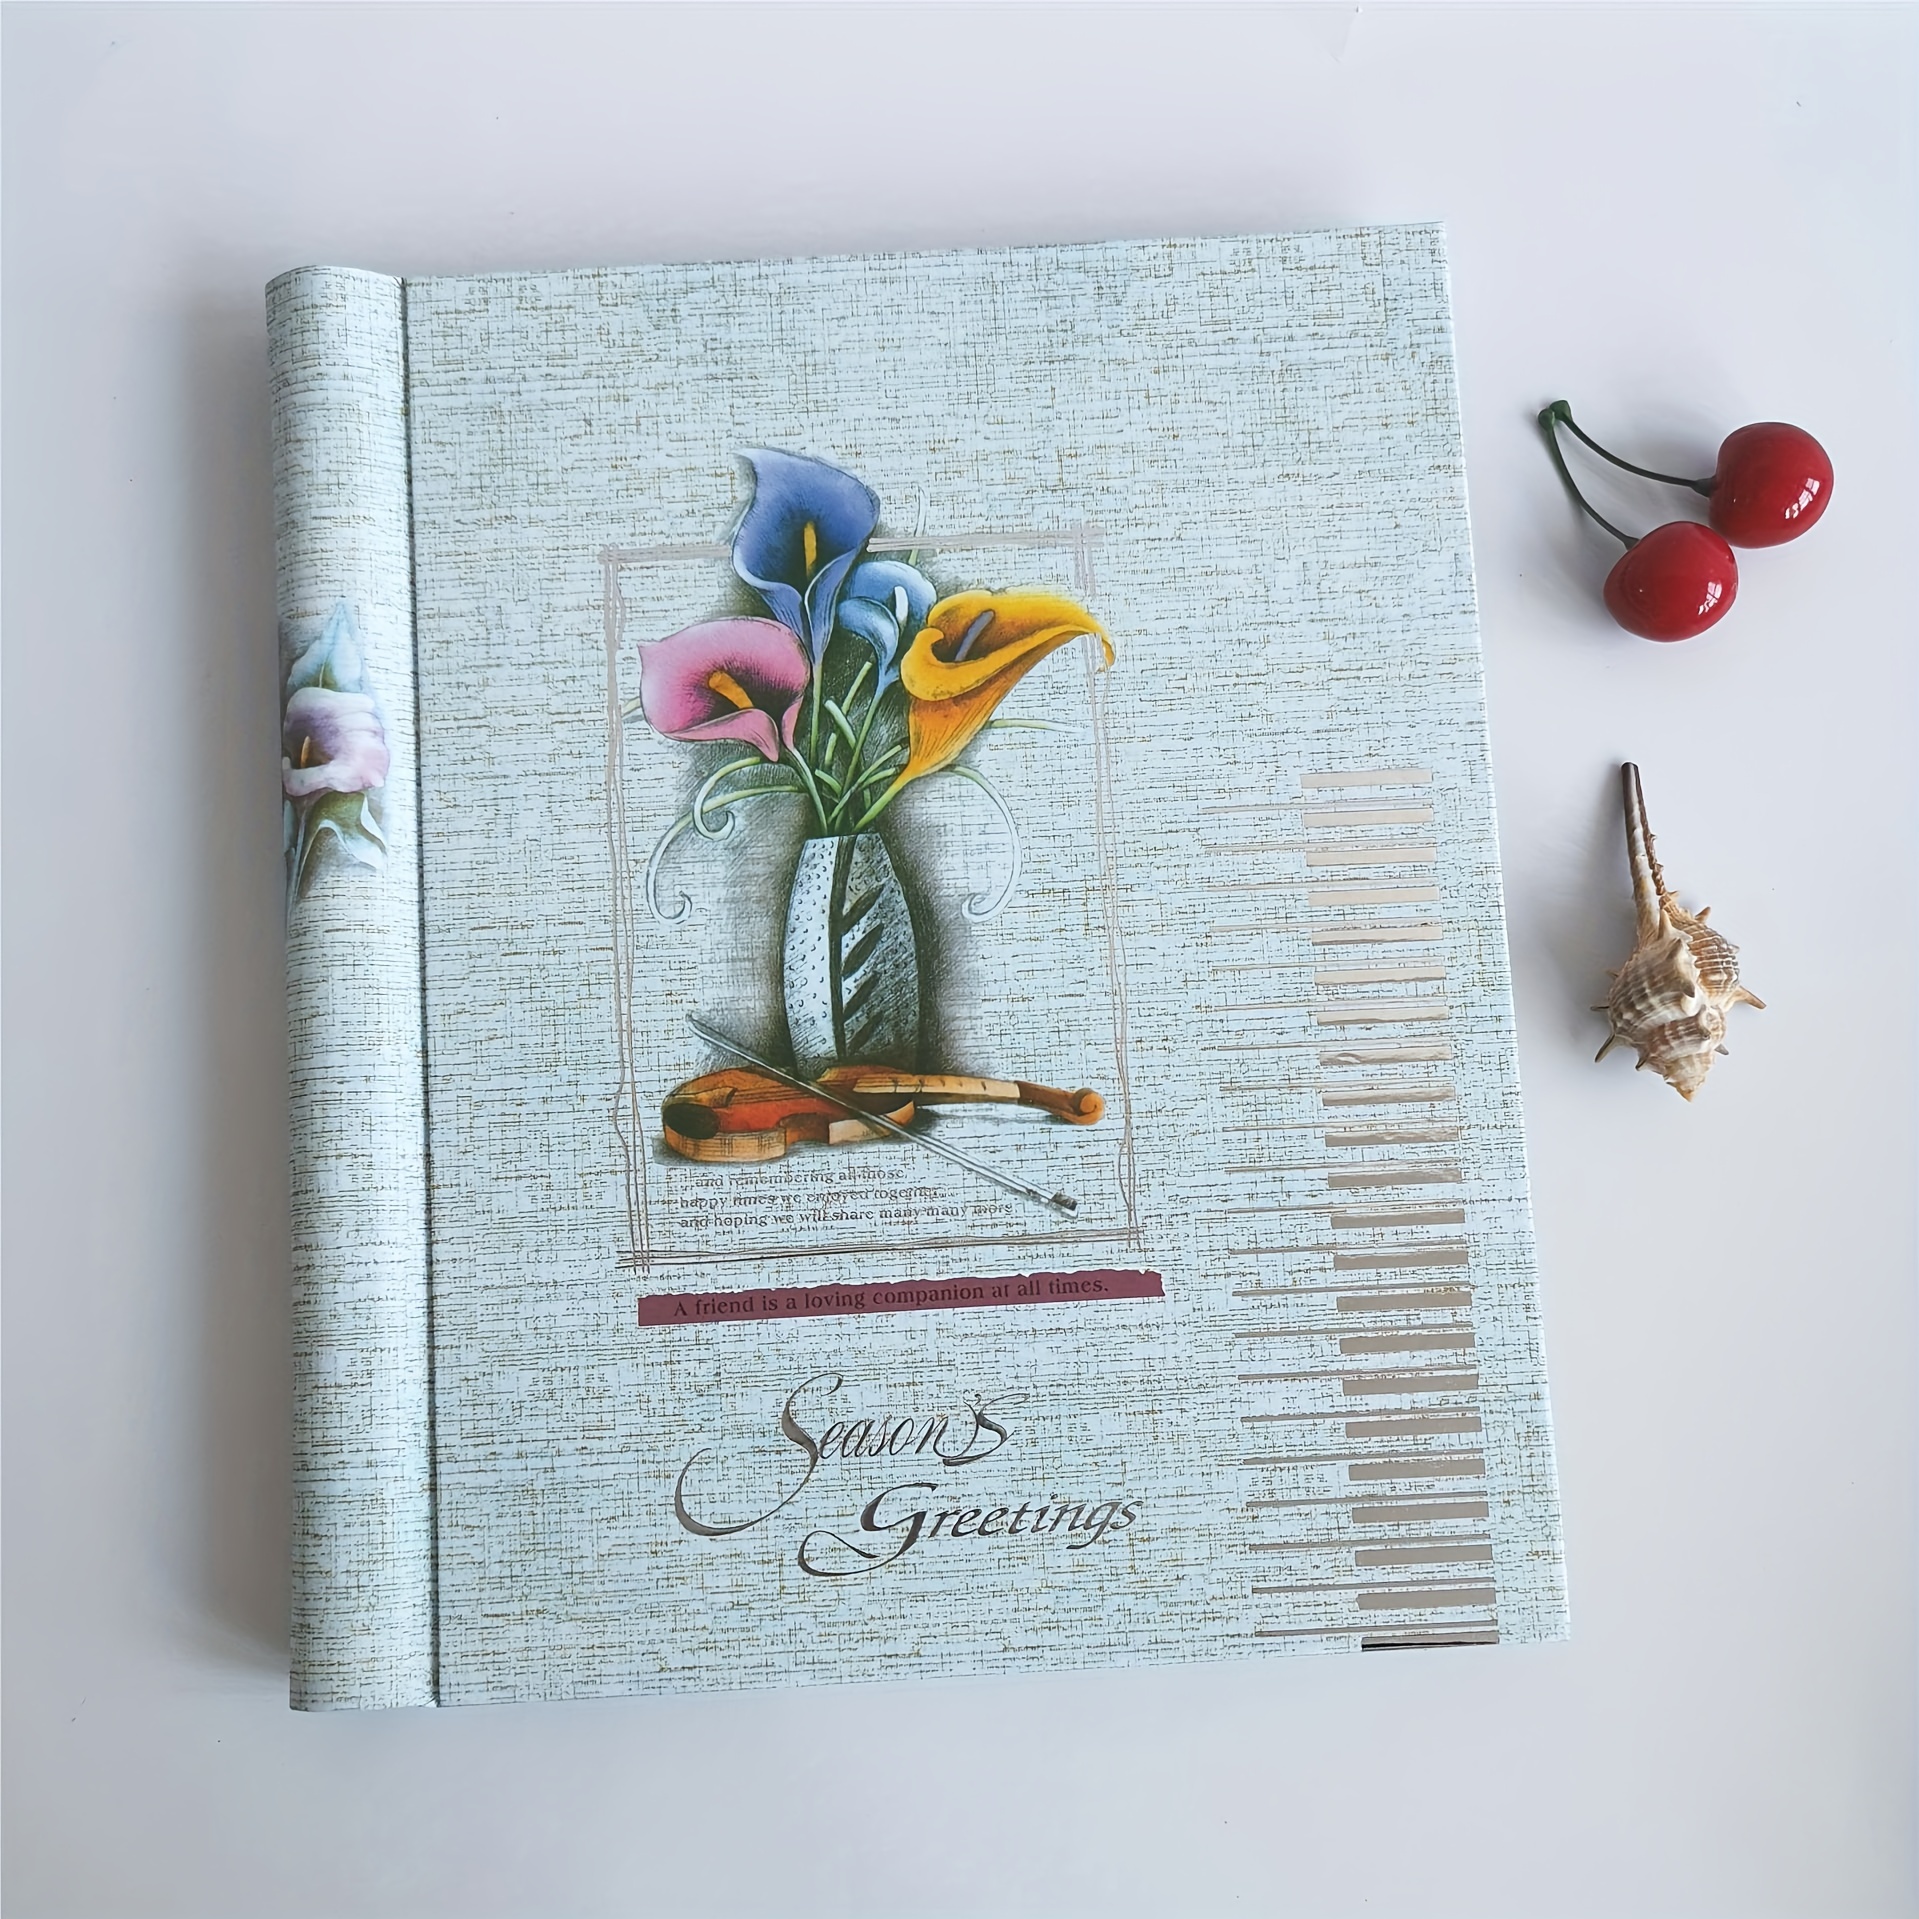 Photo Album Self Adhesive Scrapbook for Wedding/Family/Lovers